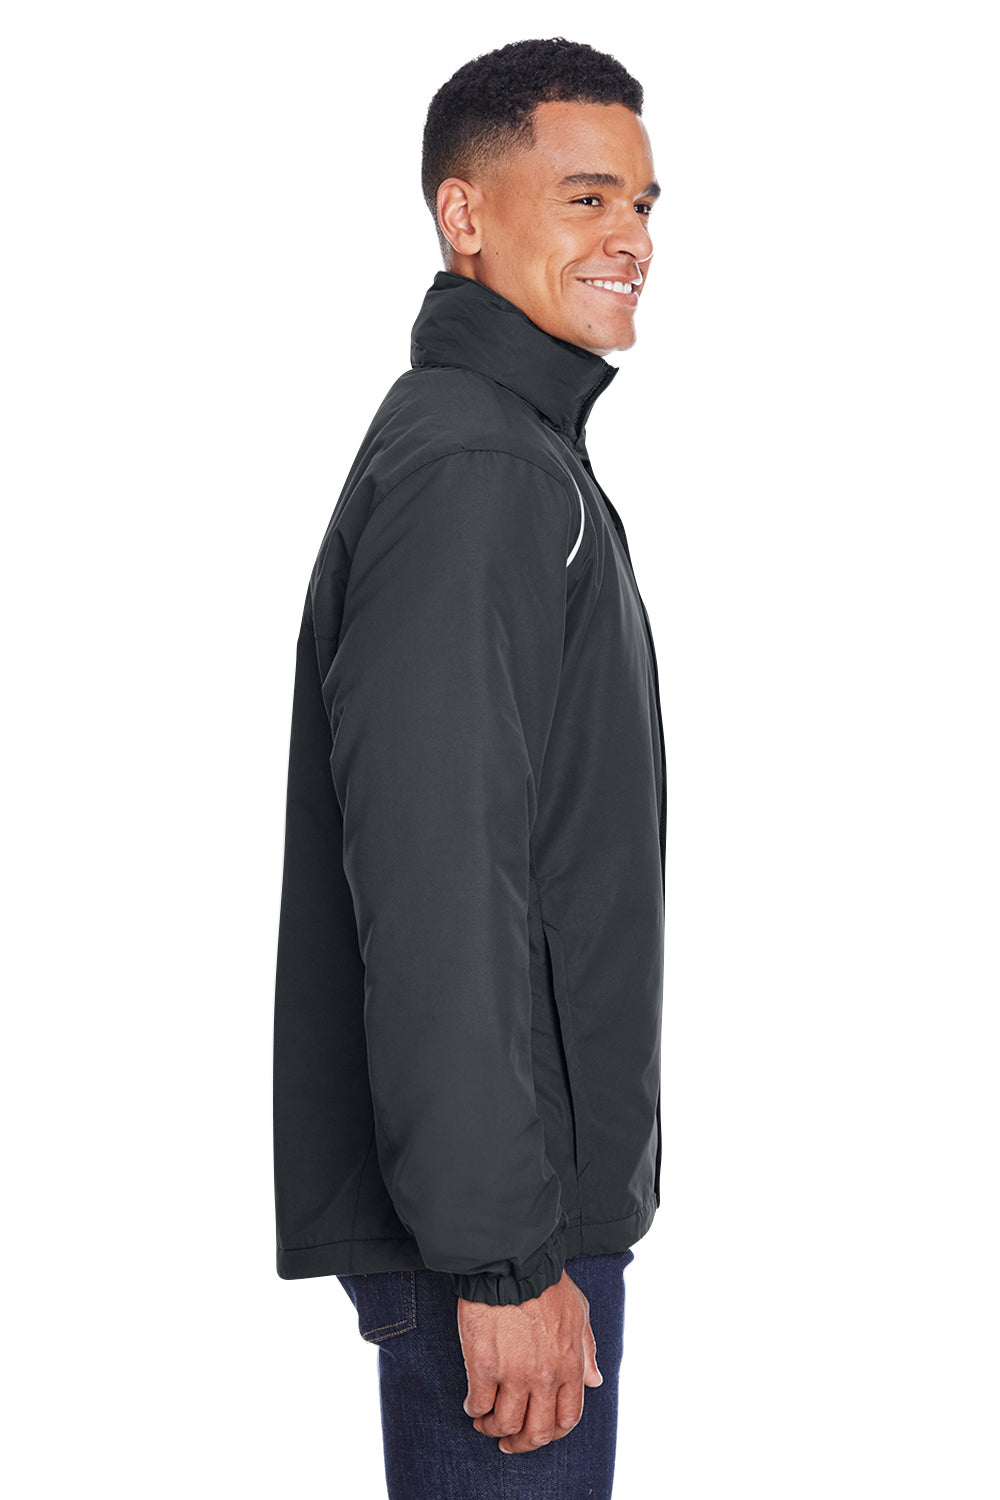 Core 365 88224 Mens Profile Water Resistant Full Zip Hooded Jacket Carbon Grey Side